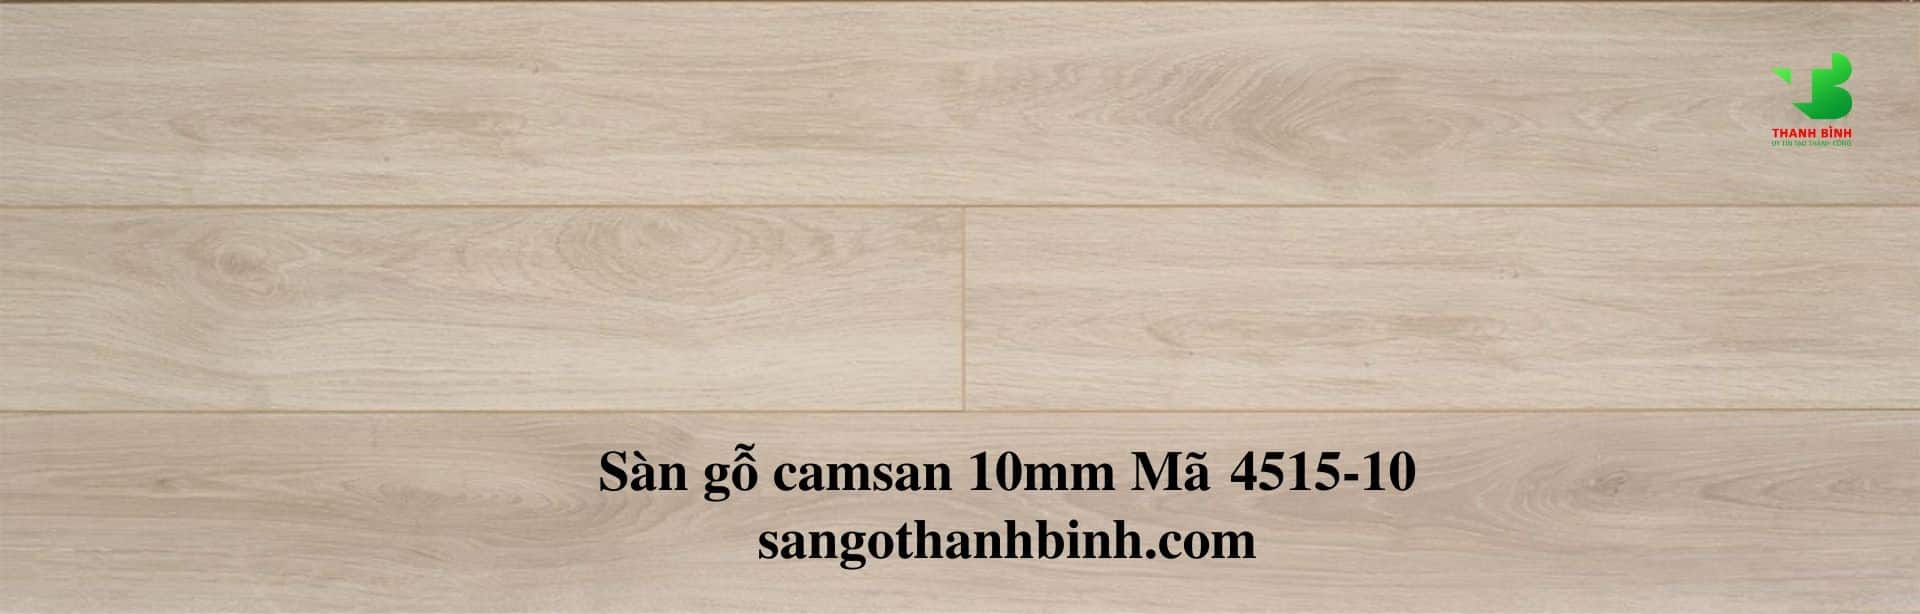 Camsan 10mm Ma 45152